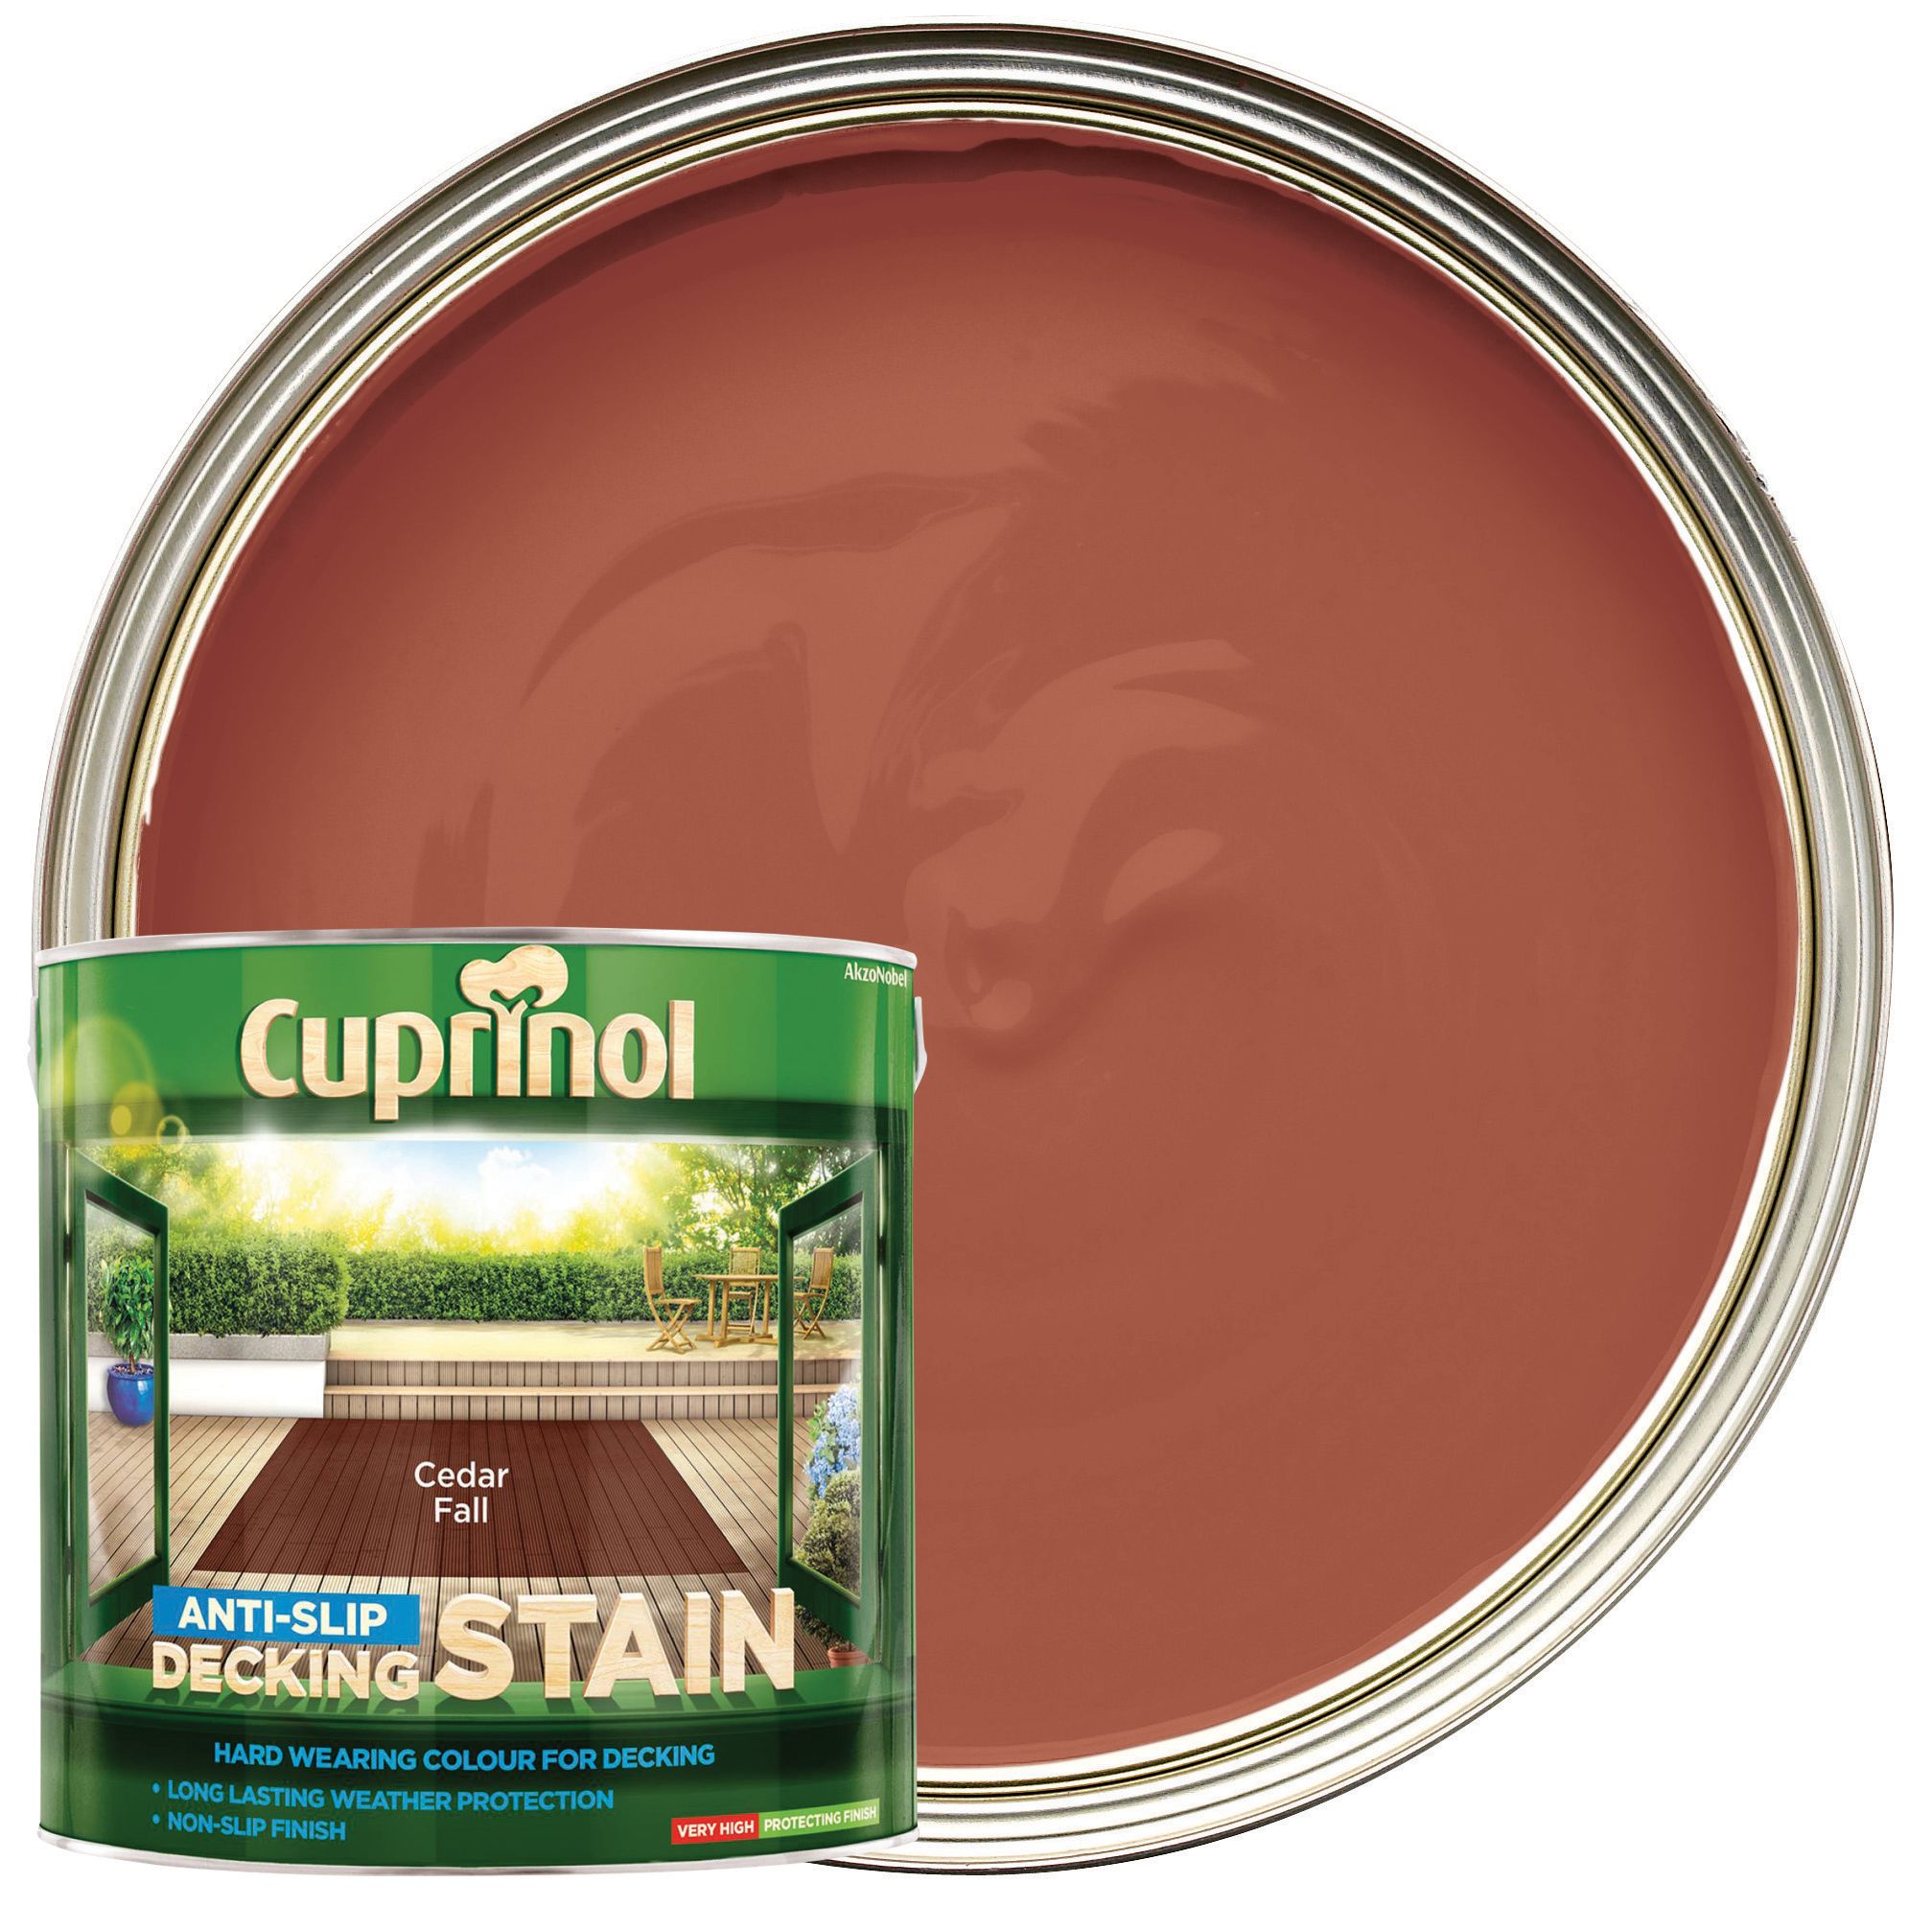 Cuprinol Anti-Slip Decking Stain - Cedar Fall 2.5L